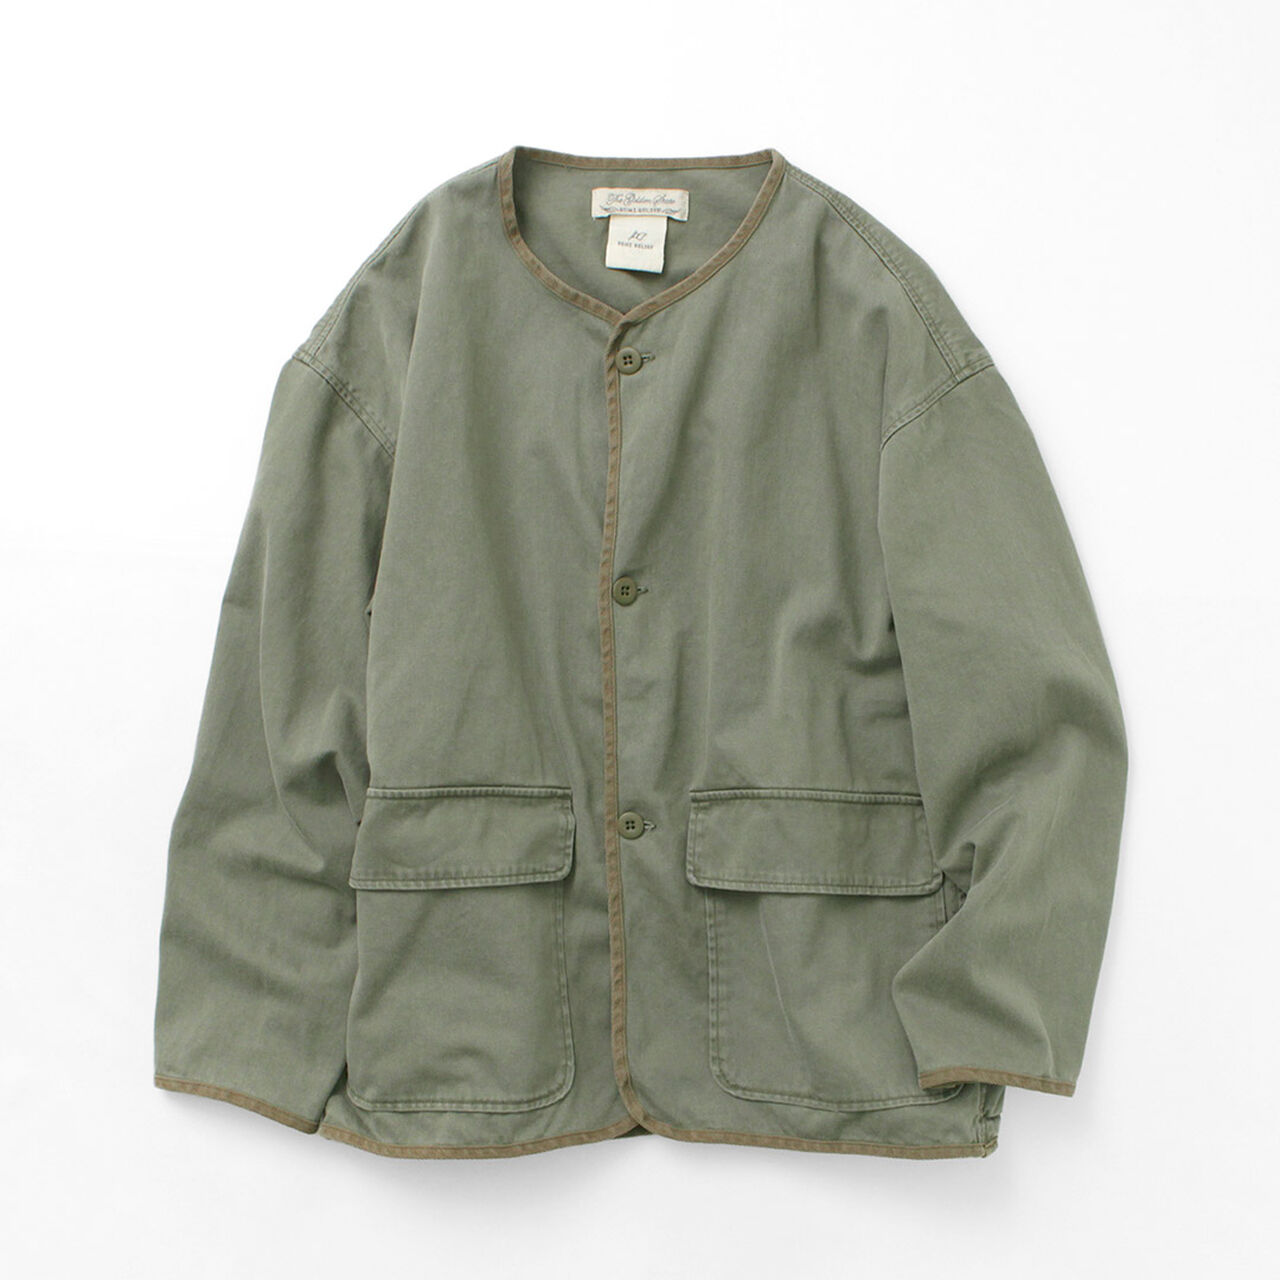 Vintage Vest Daiwa for fishing, Men's Fashion, Coats, Jackets and